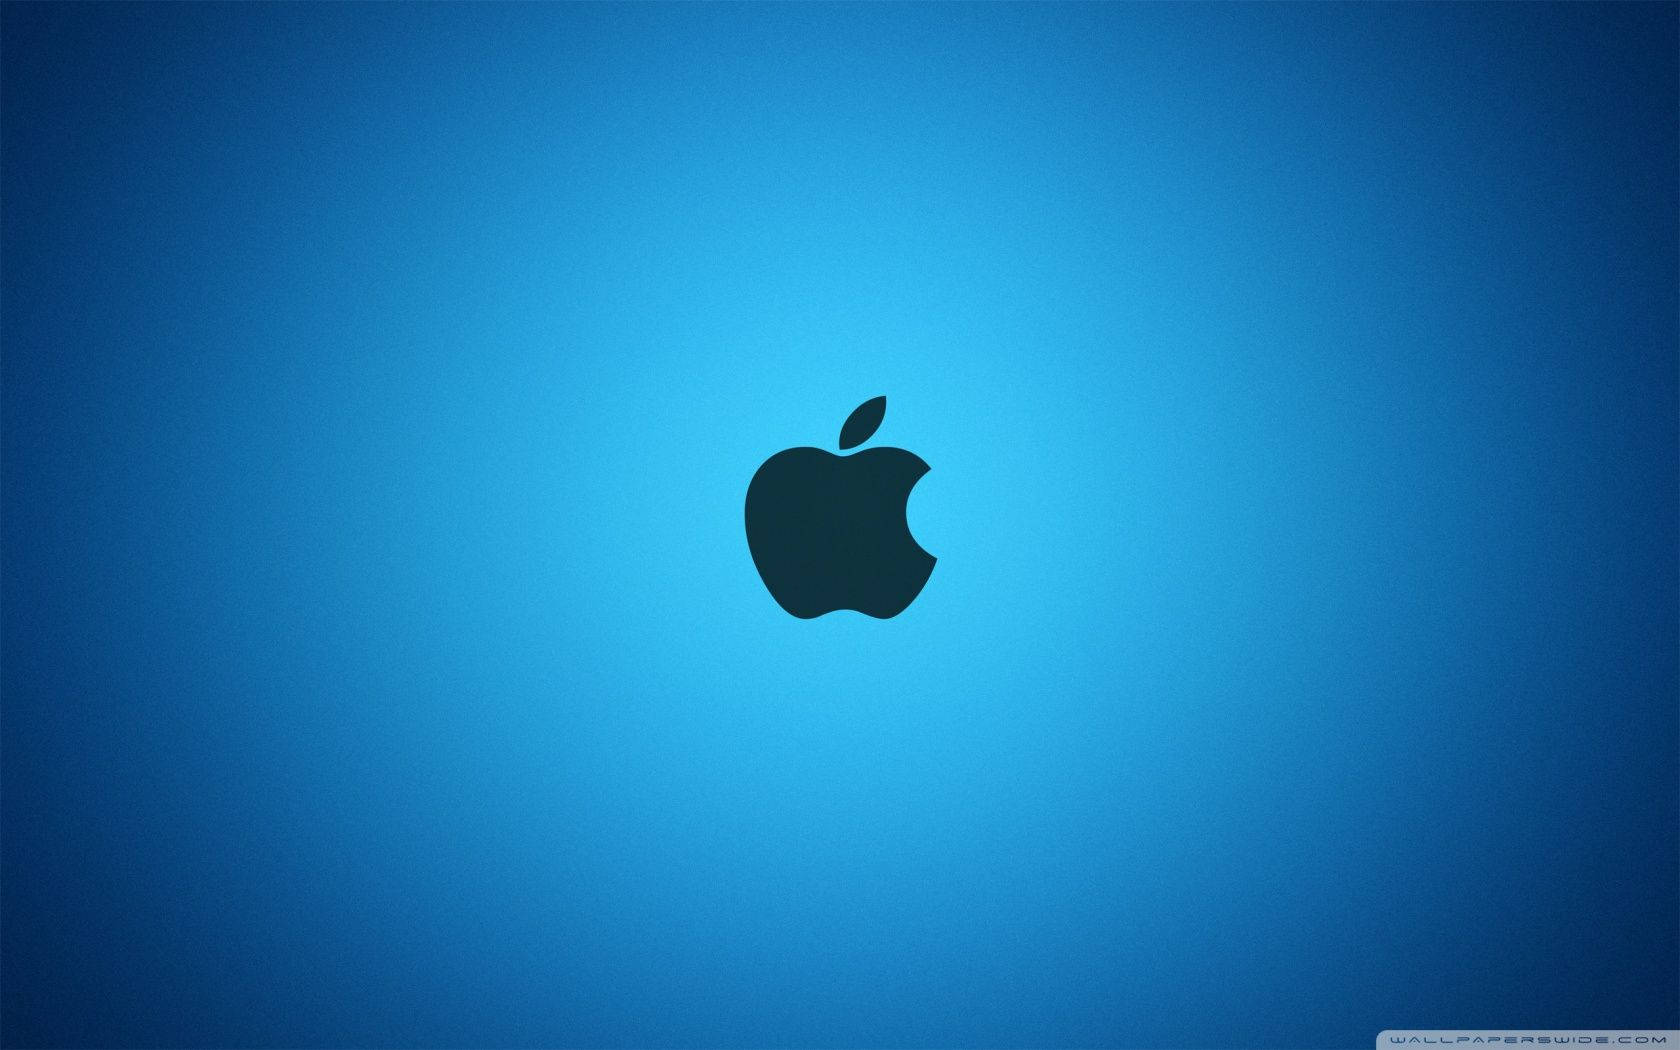 Stunning High-resolution Image Of Apple Logo In Vibrant Blue Wallpaper